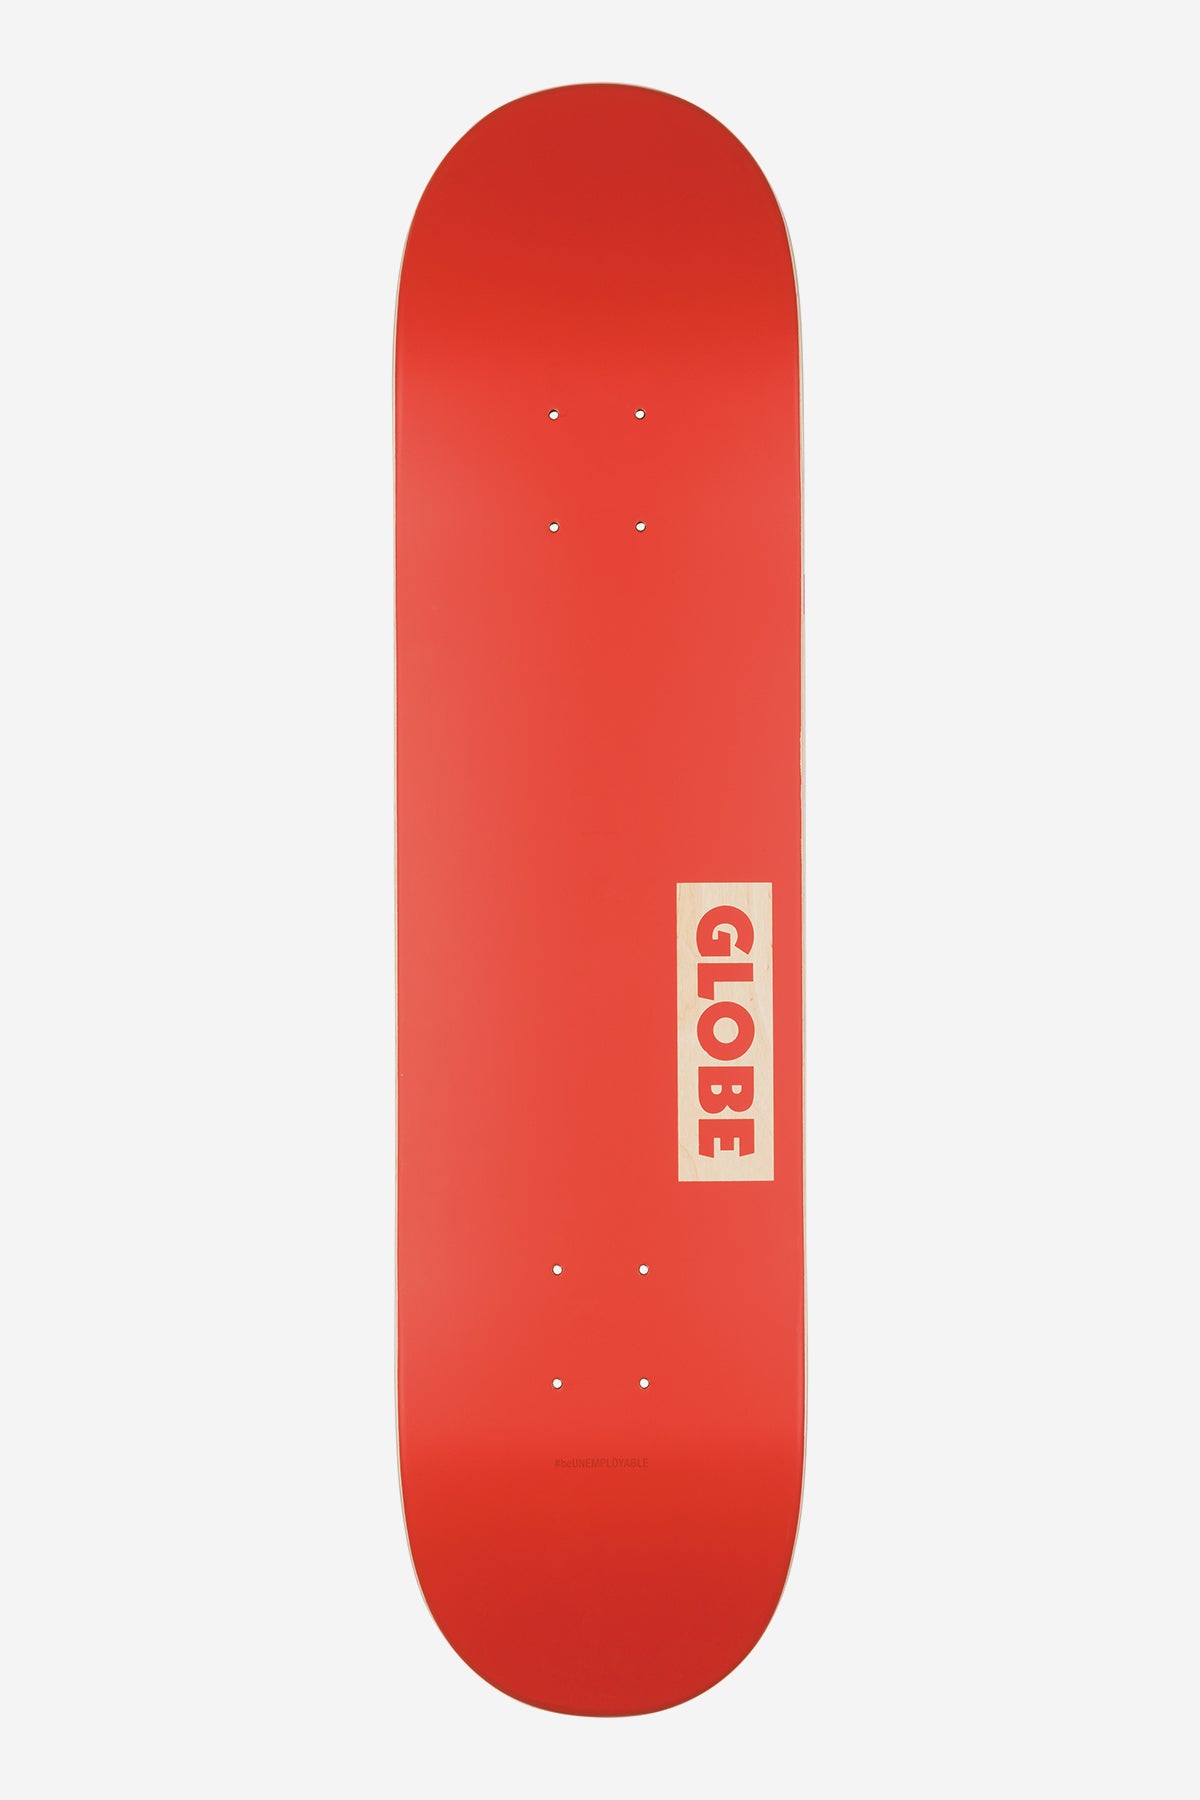 Goodstock - Red - 7.75" Skateboard Deck